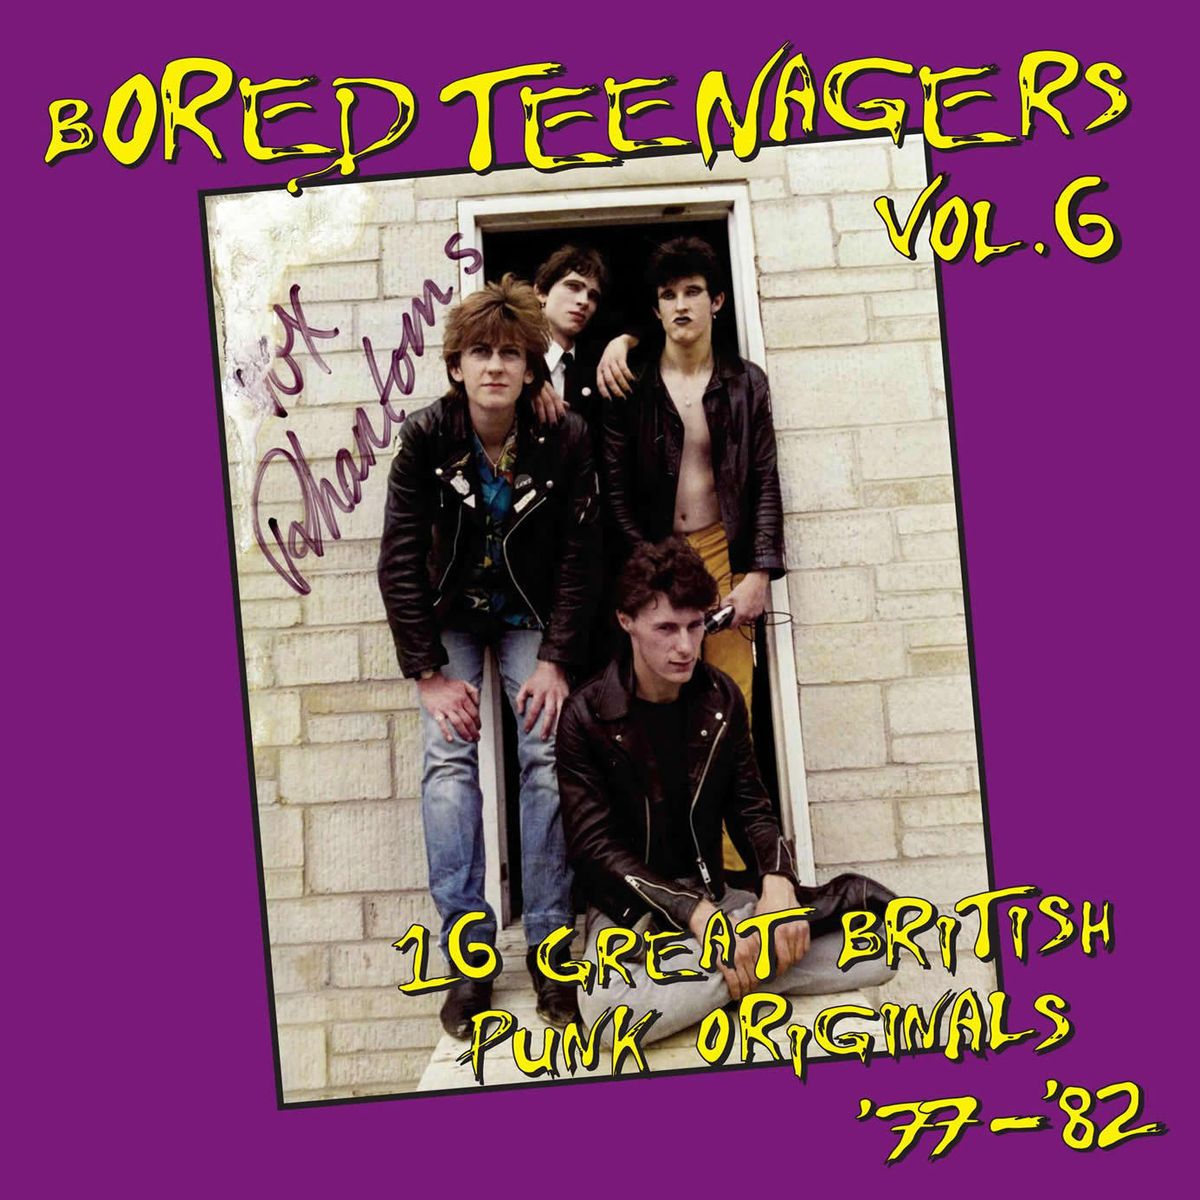 At long last BORED TEENAGERS Vol 6 LP + BOOKLET punk kbd NWOBHM 